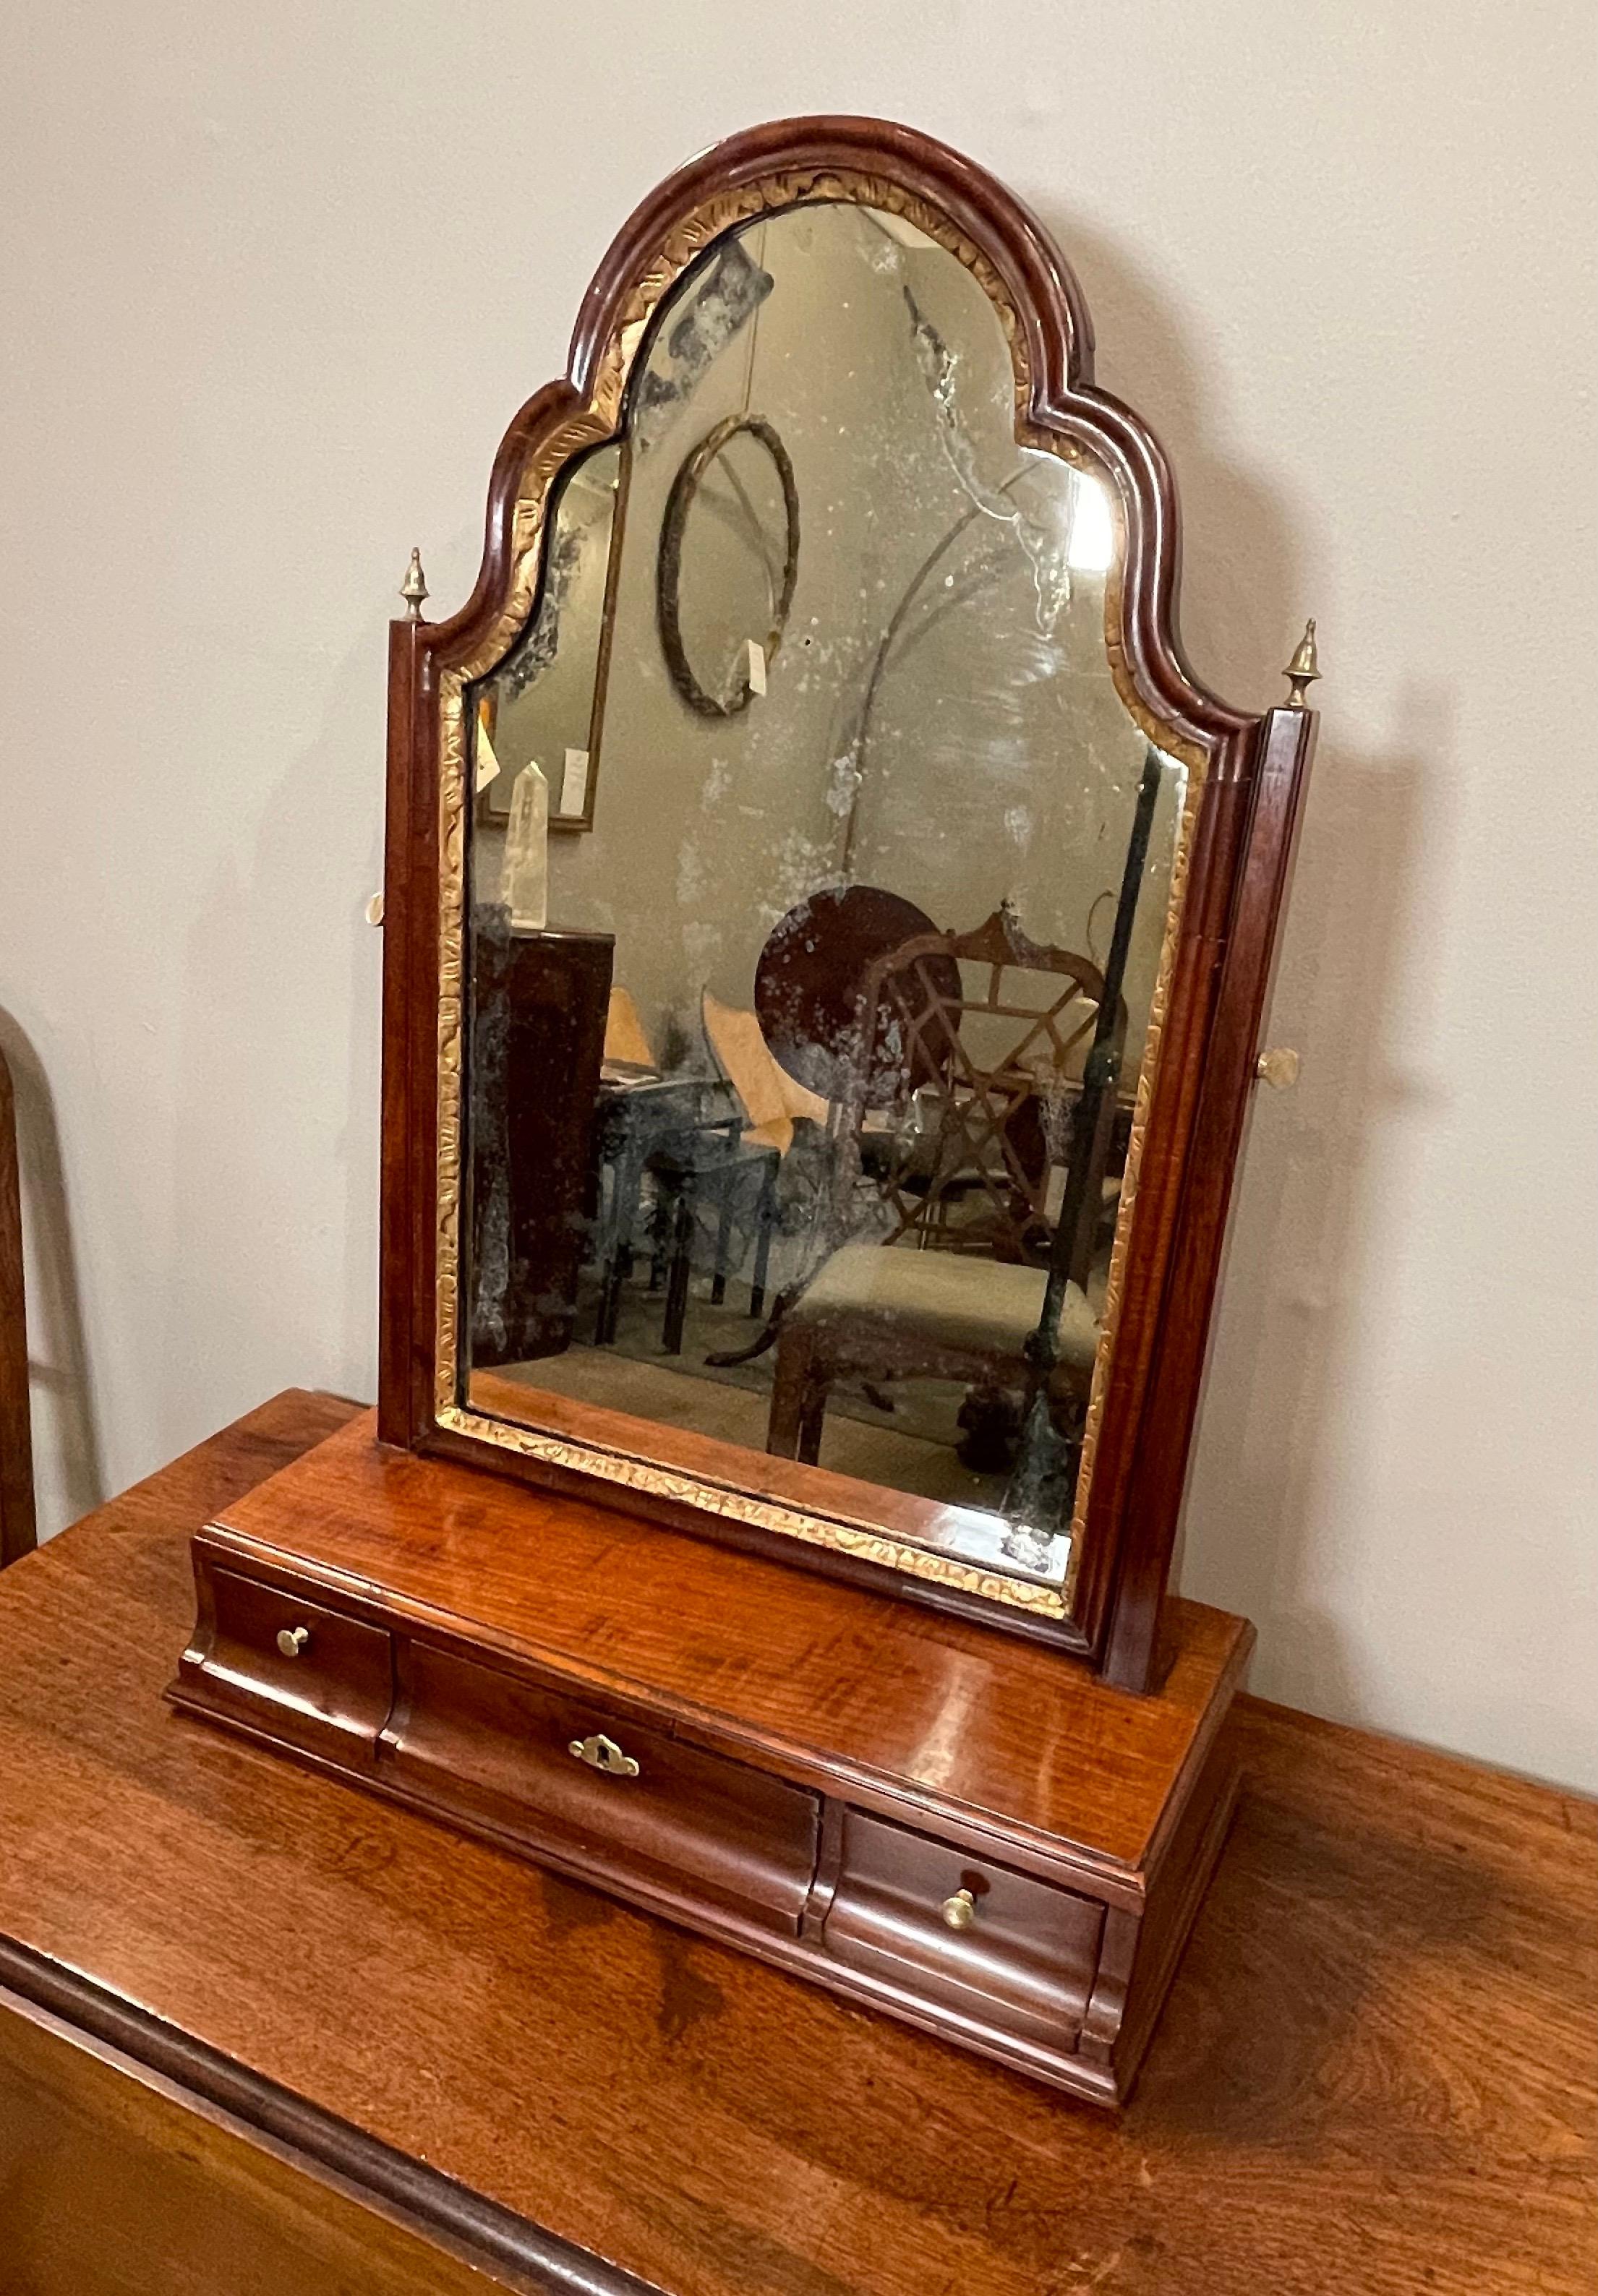 Queen Anne Walnut & parcel gilt toilet mirror with beveled mirror above 3 drawers. 